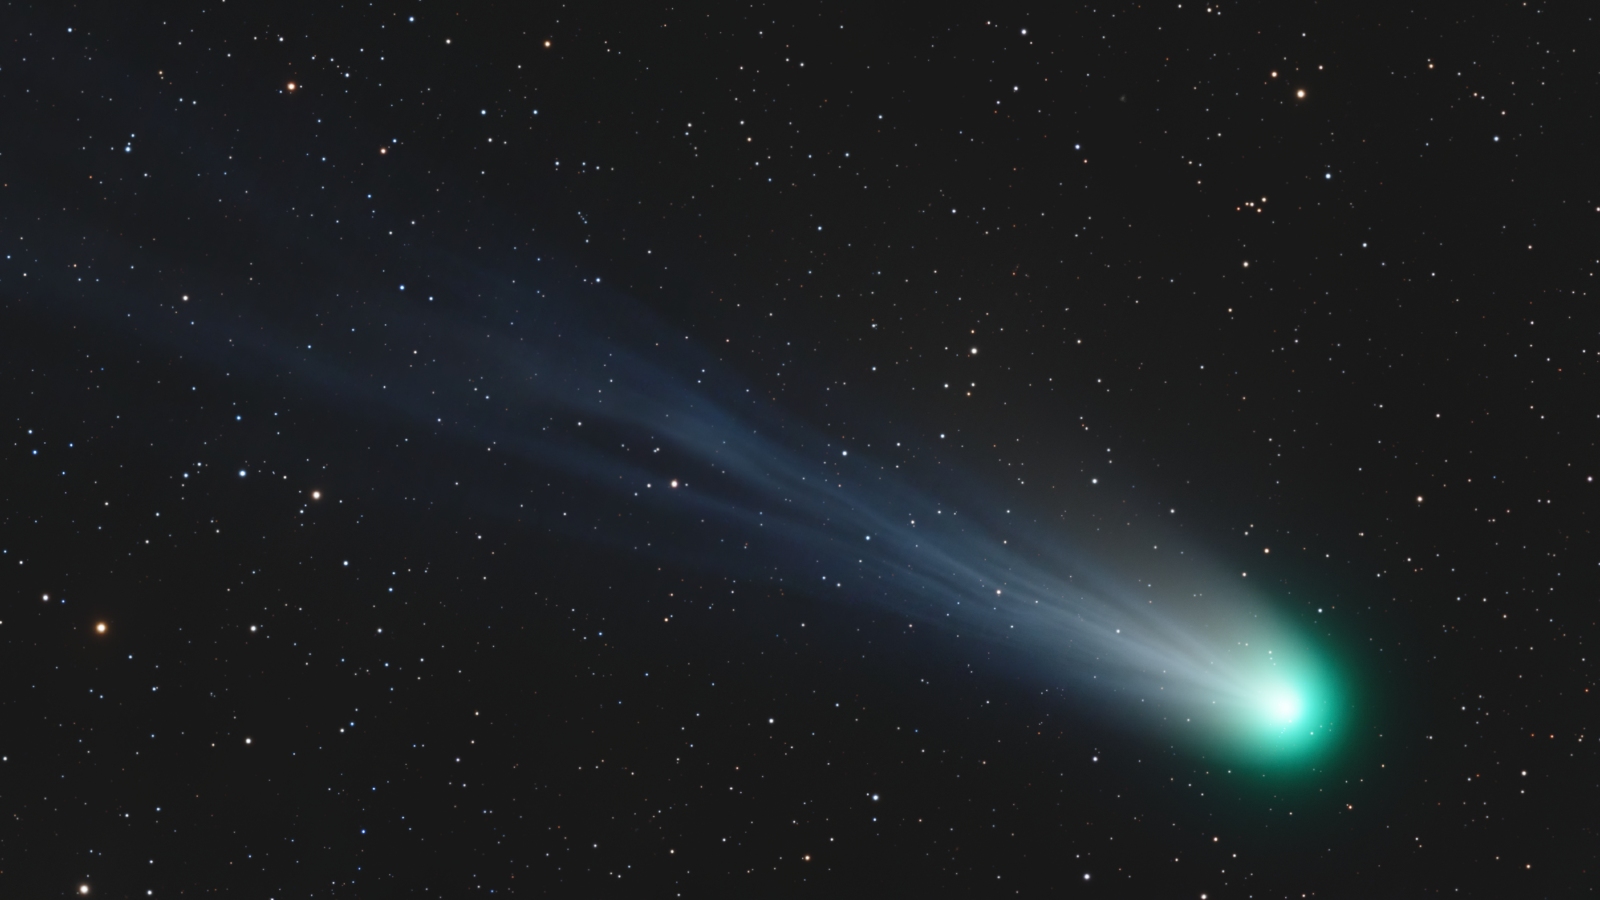 A green comet streaking across the night sky